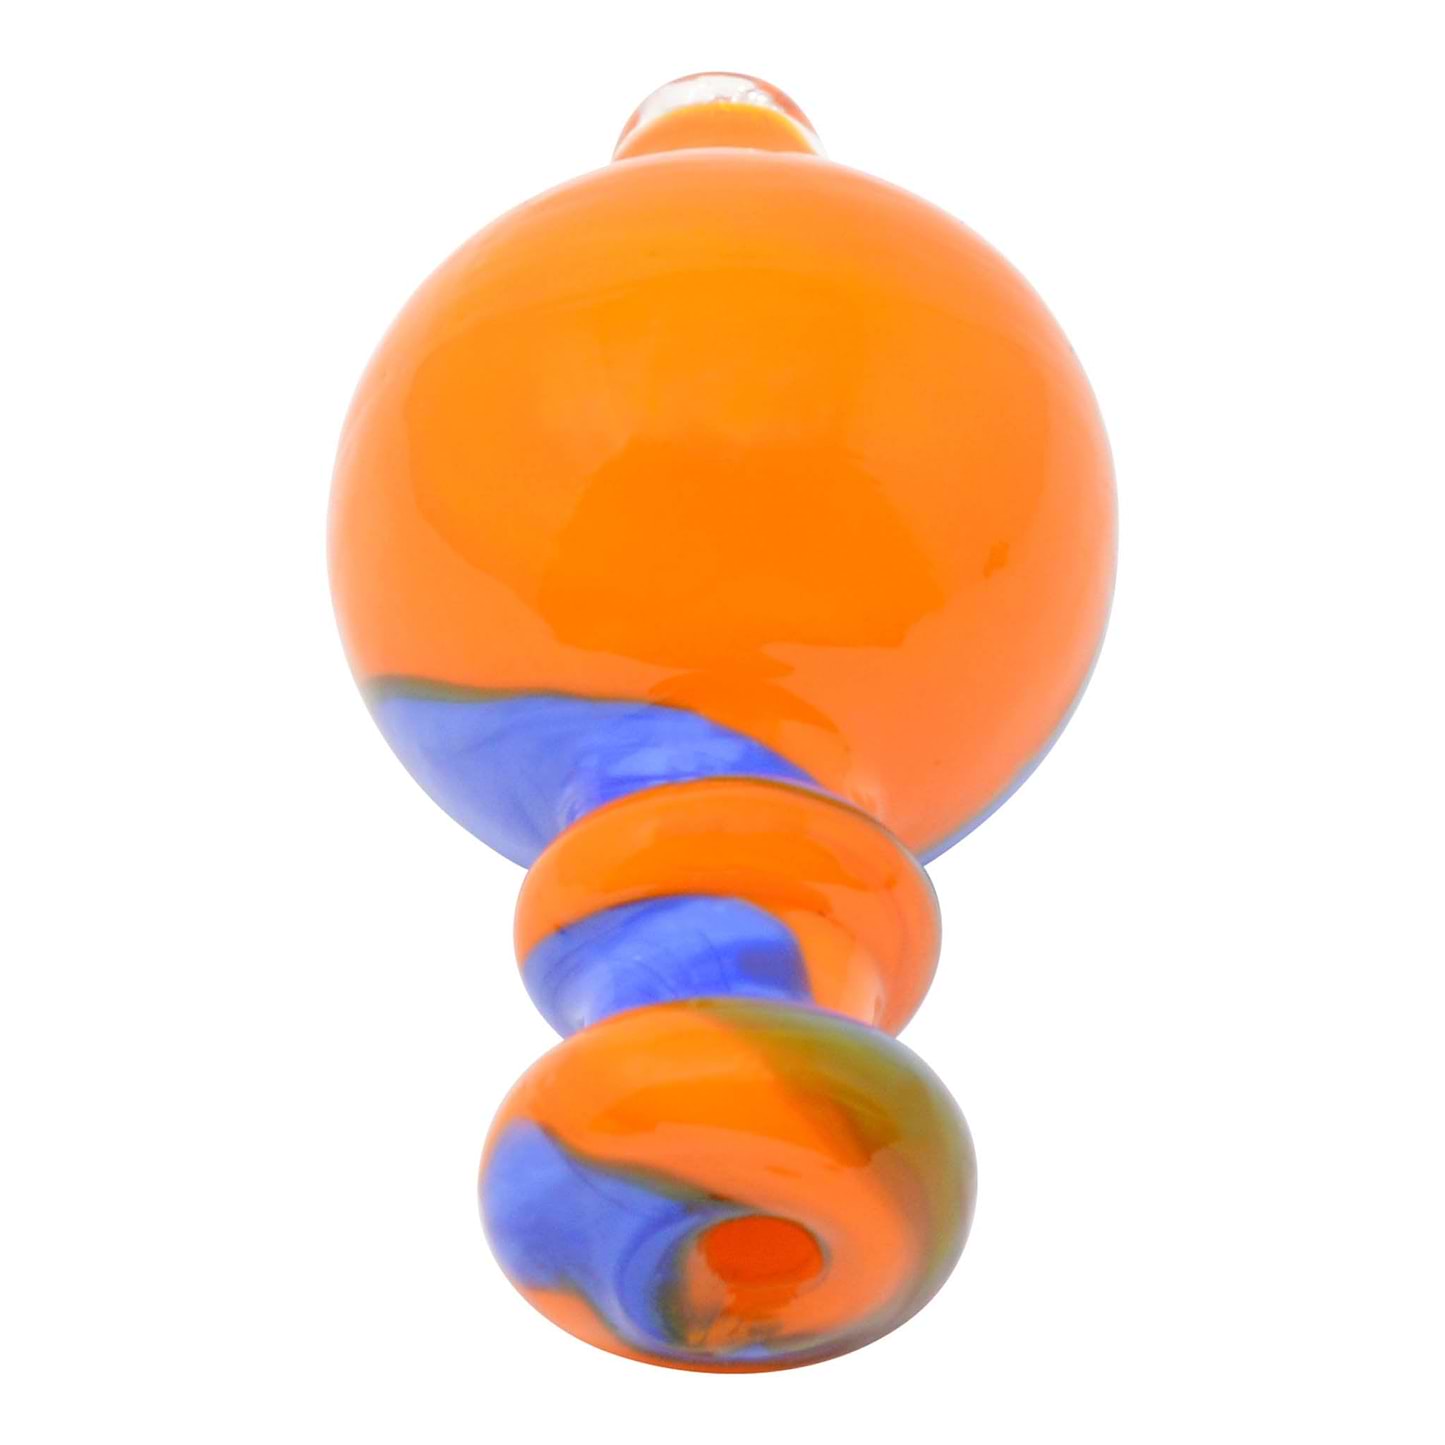 Twirled Carb Cap - 2.5in Orange and Blue